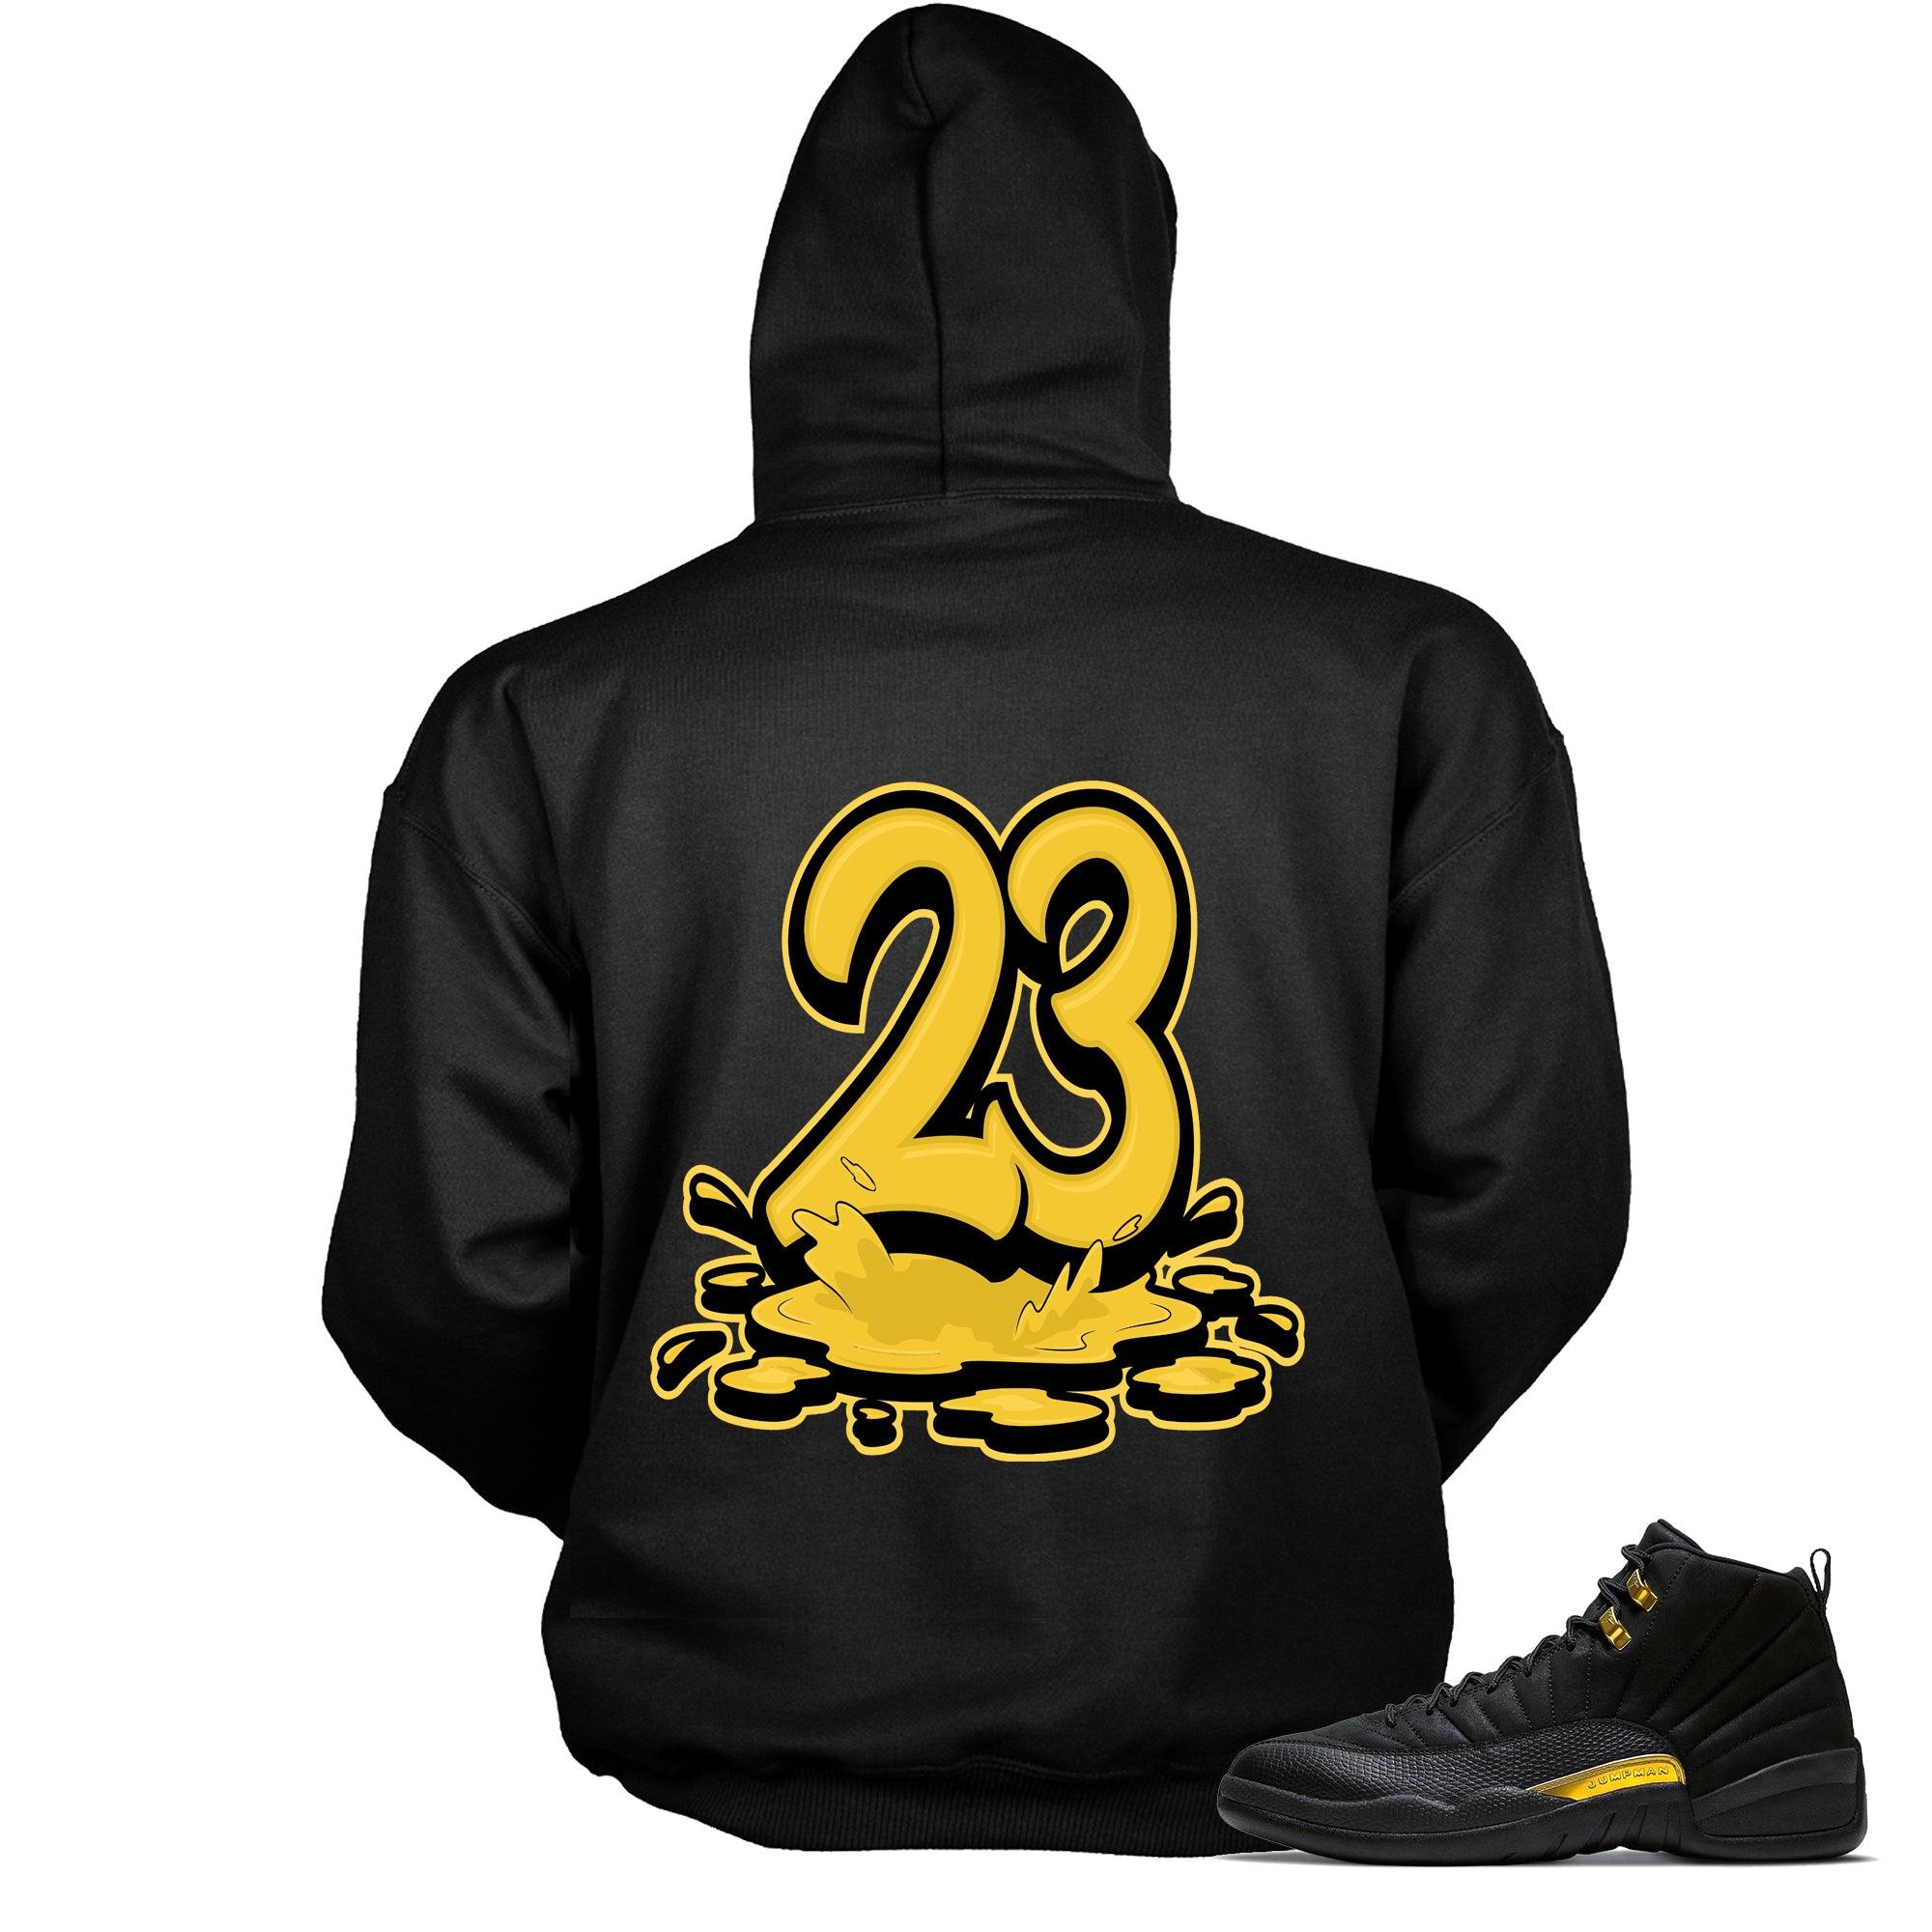 23 Melting Sneaker Sweatshirt AJ 12 Black Taxi photo